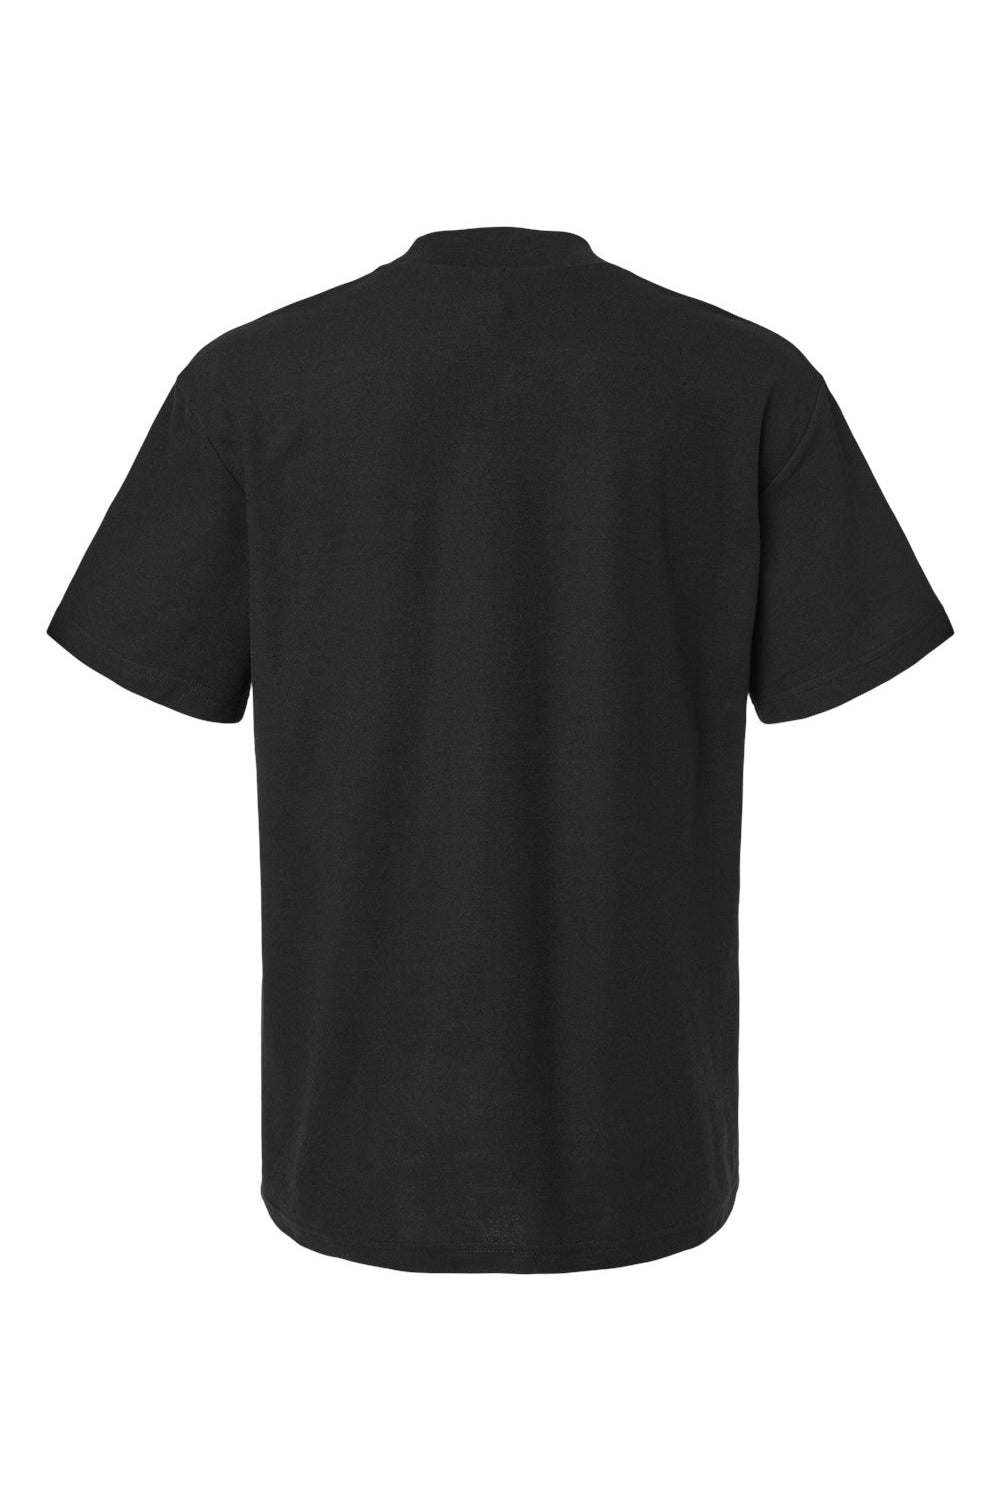 American Apparel 1PQ Mens Short Sleeve Mock Neck T-Shirt Black Flat Back